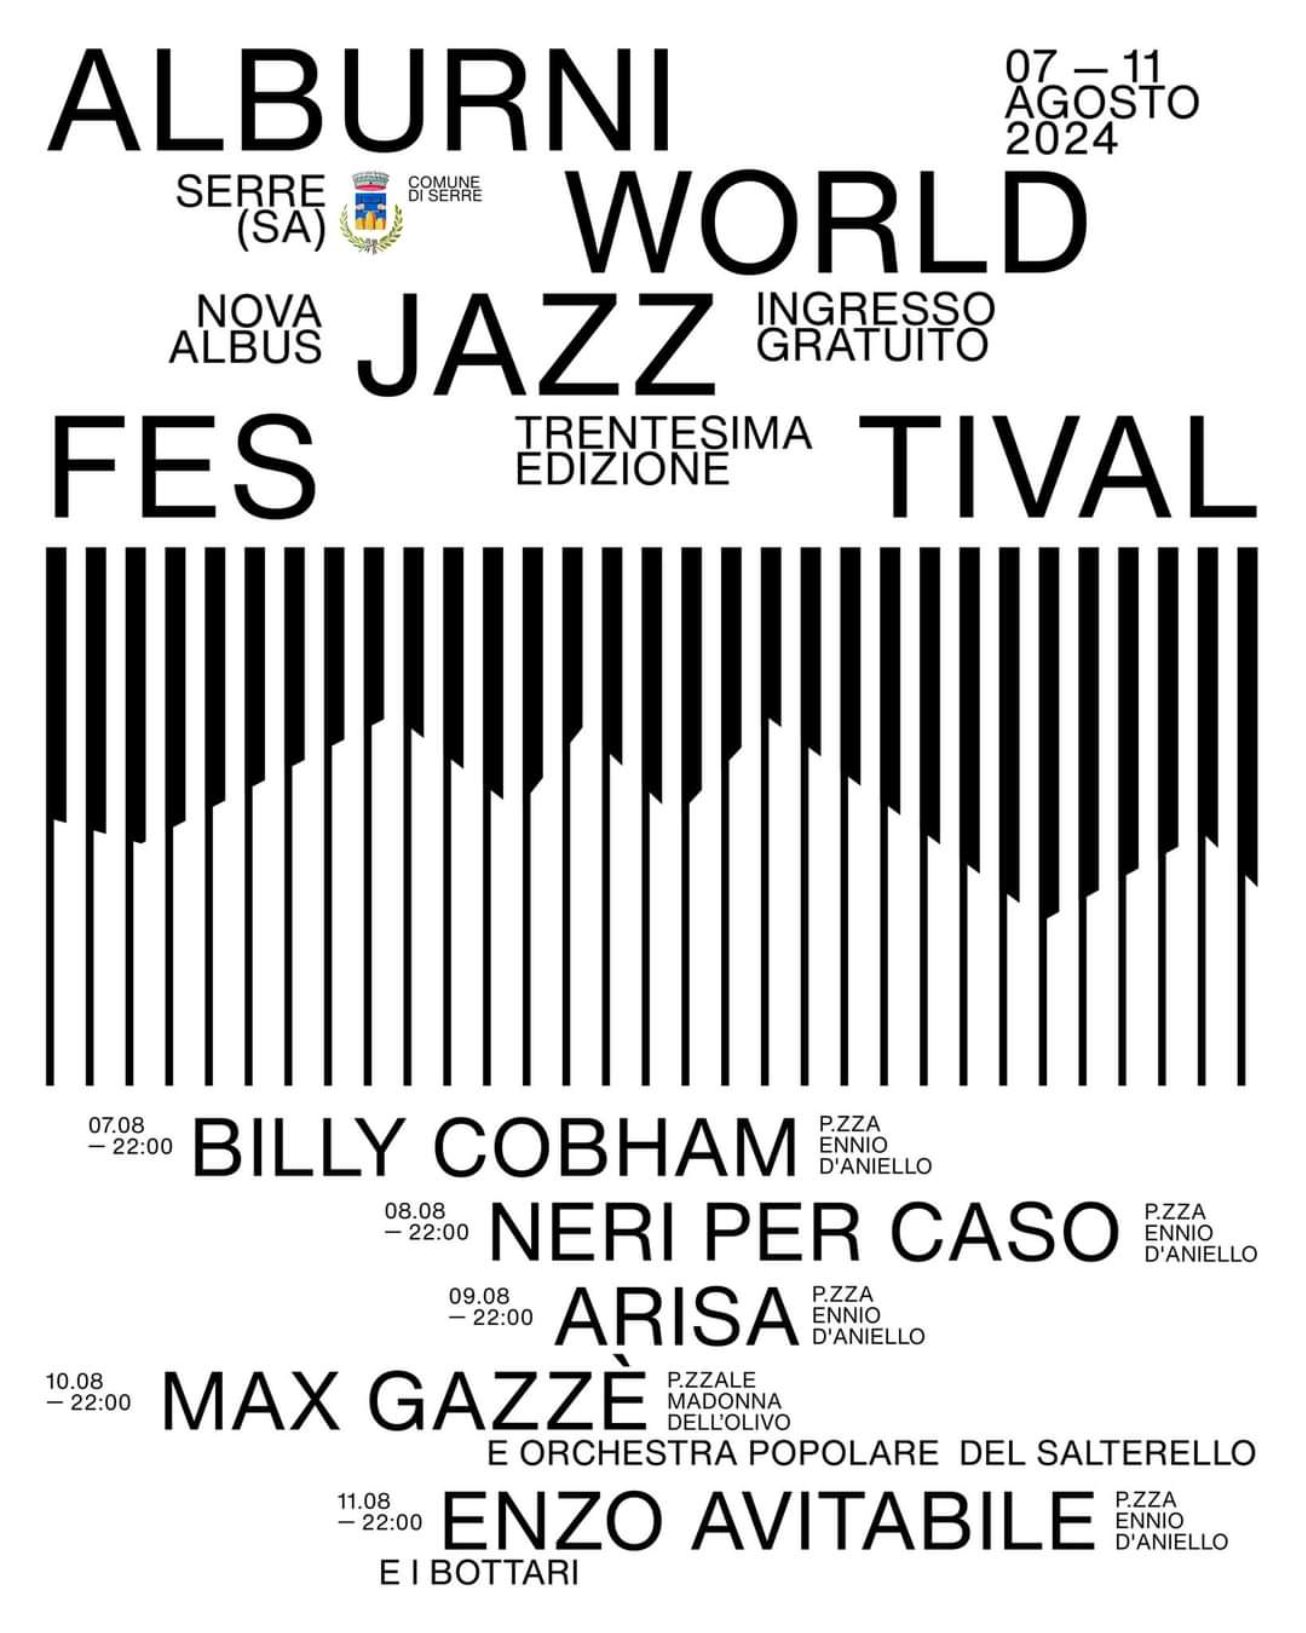 Alburni World Jazz Festival